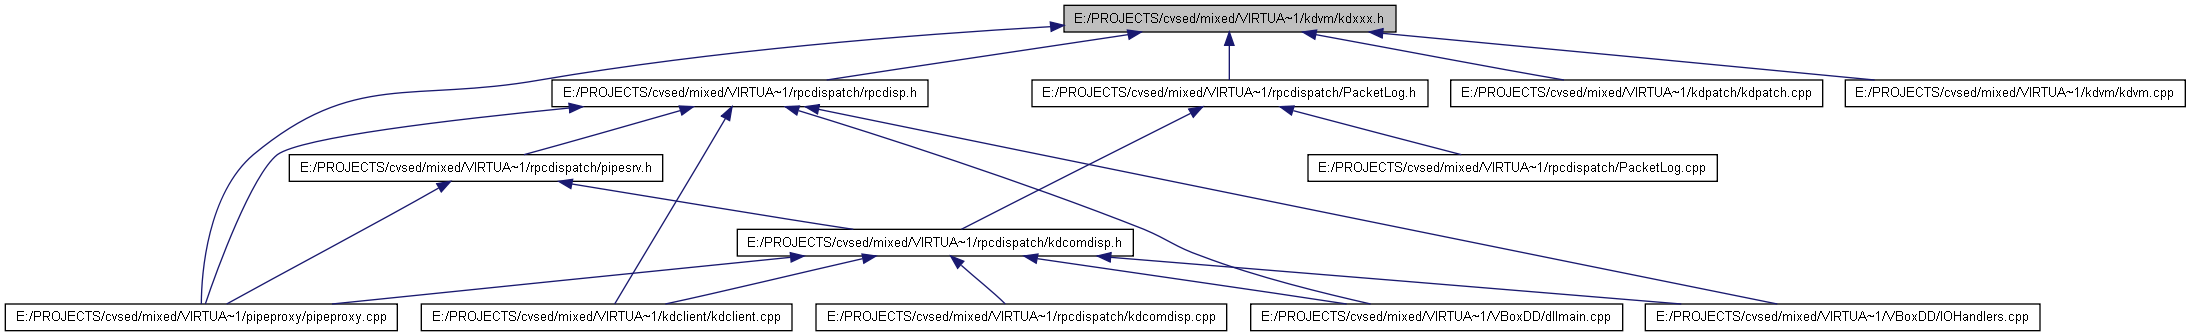 VirtualKD: E:/PROJECTS/cvsed/mixed/VIRTUA~1/kdvm/kdxxx.h File ...